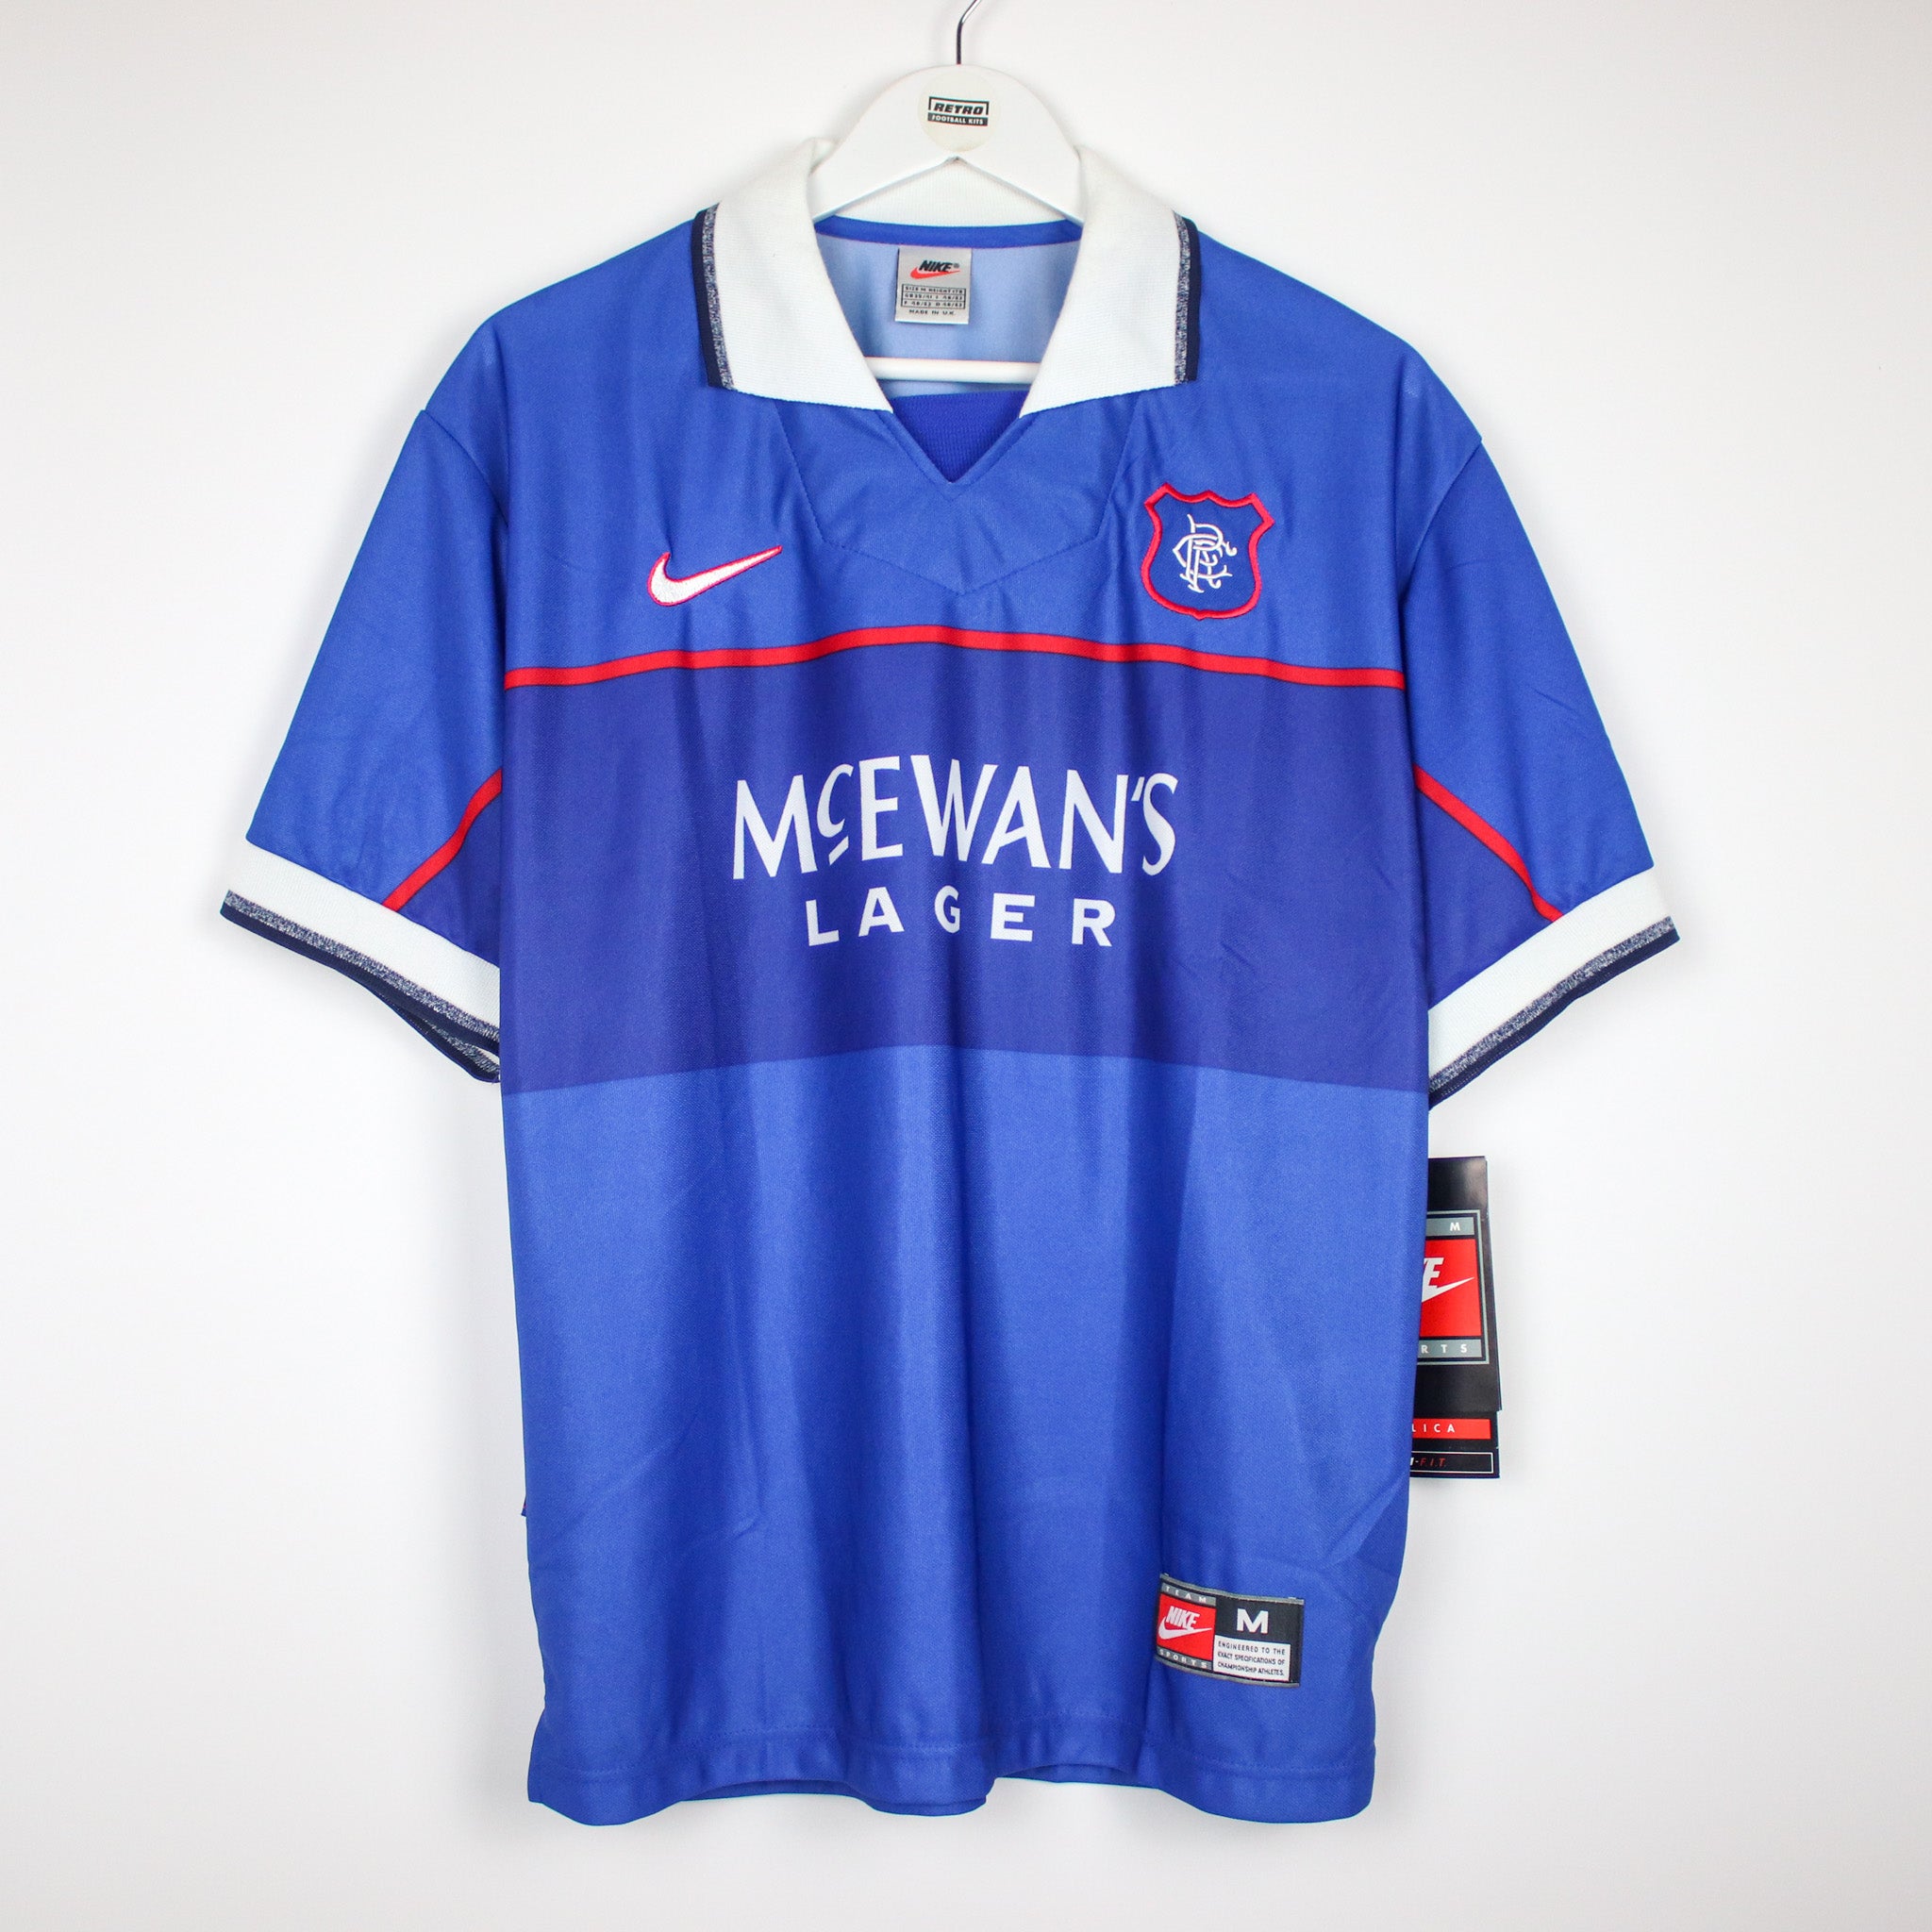 1997-99 Rangers Home Shirt #BNWT (Excellent) - M